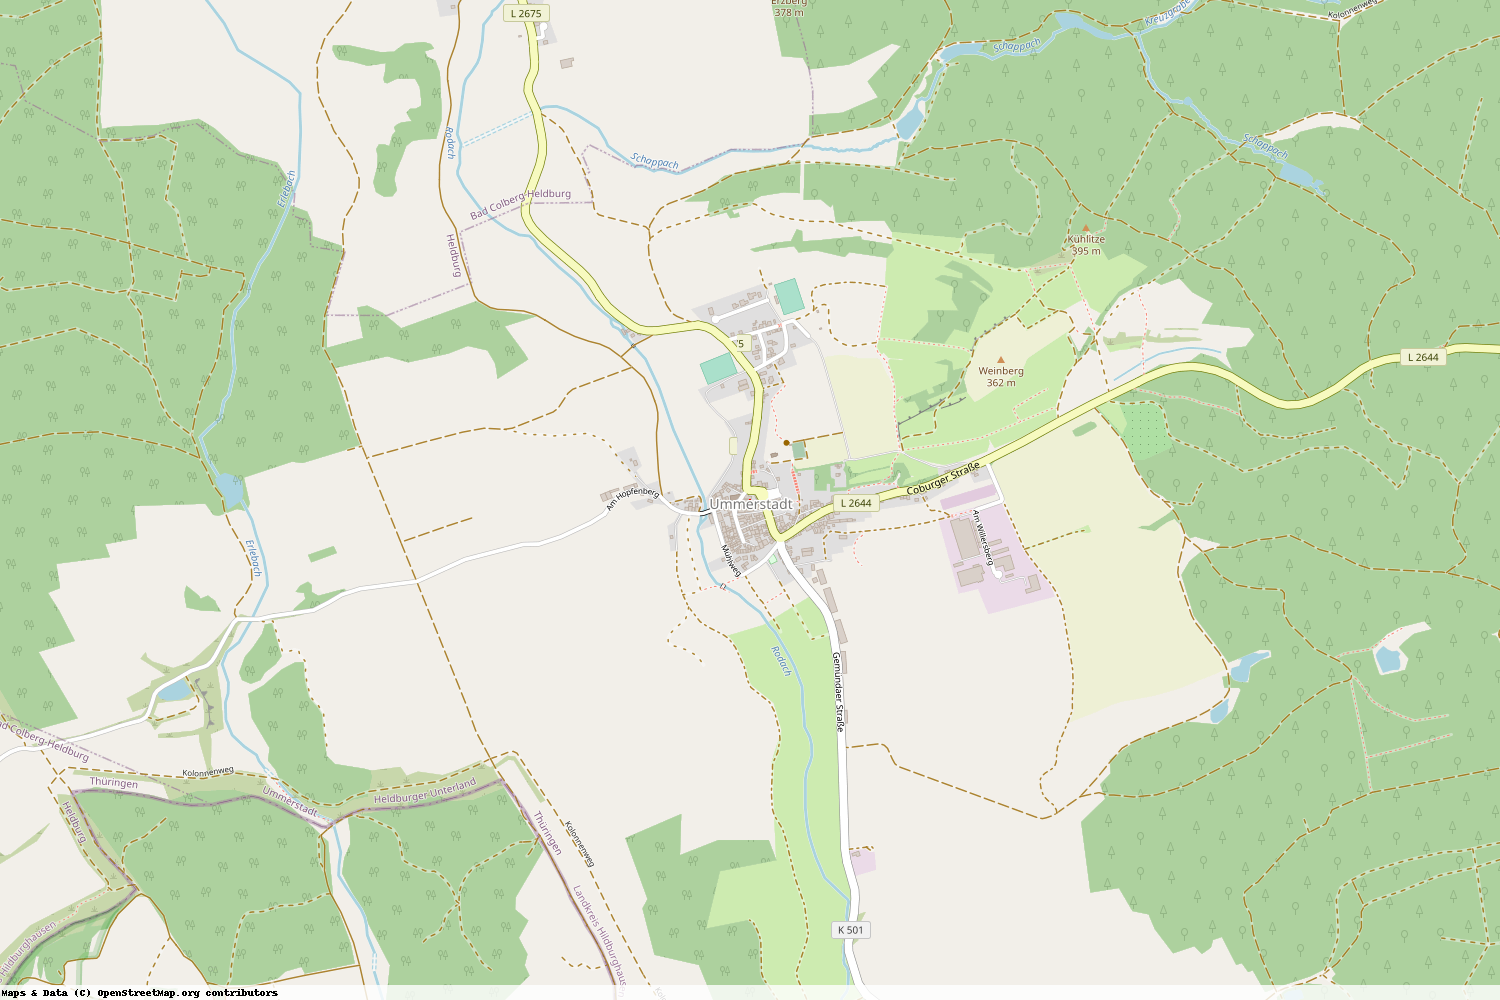 Ist gerade Stromausfall in Thüringen - Hildburghausen - Ummerstadt?